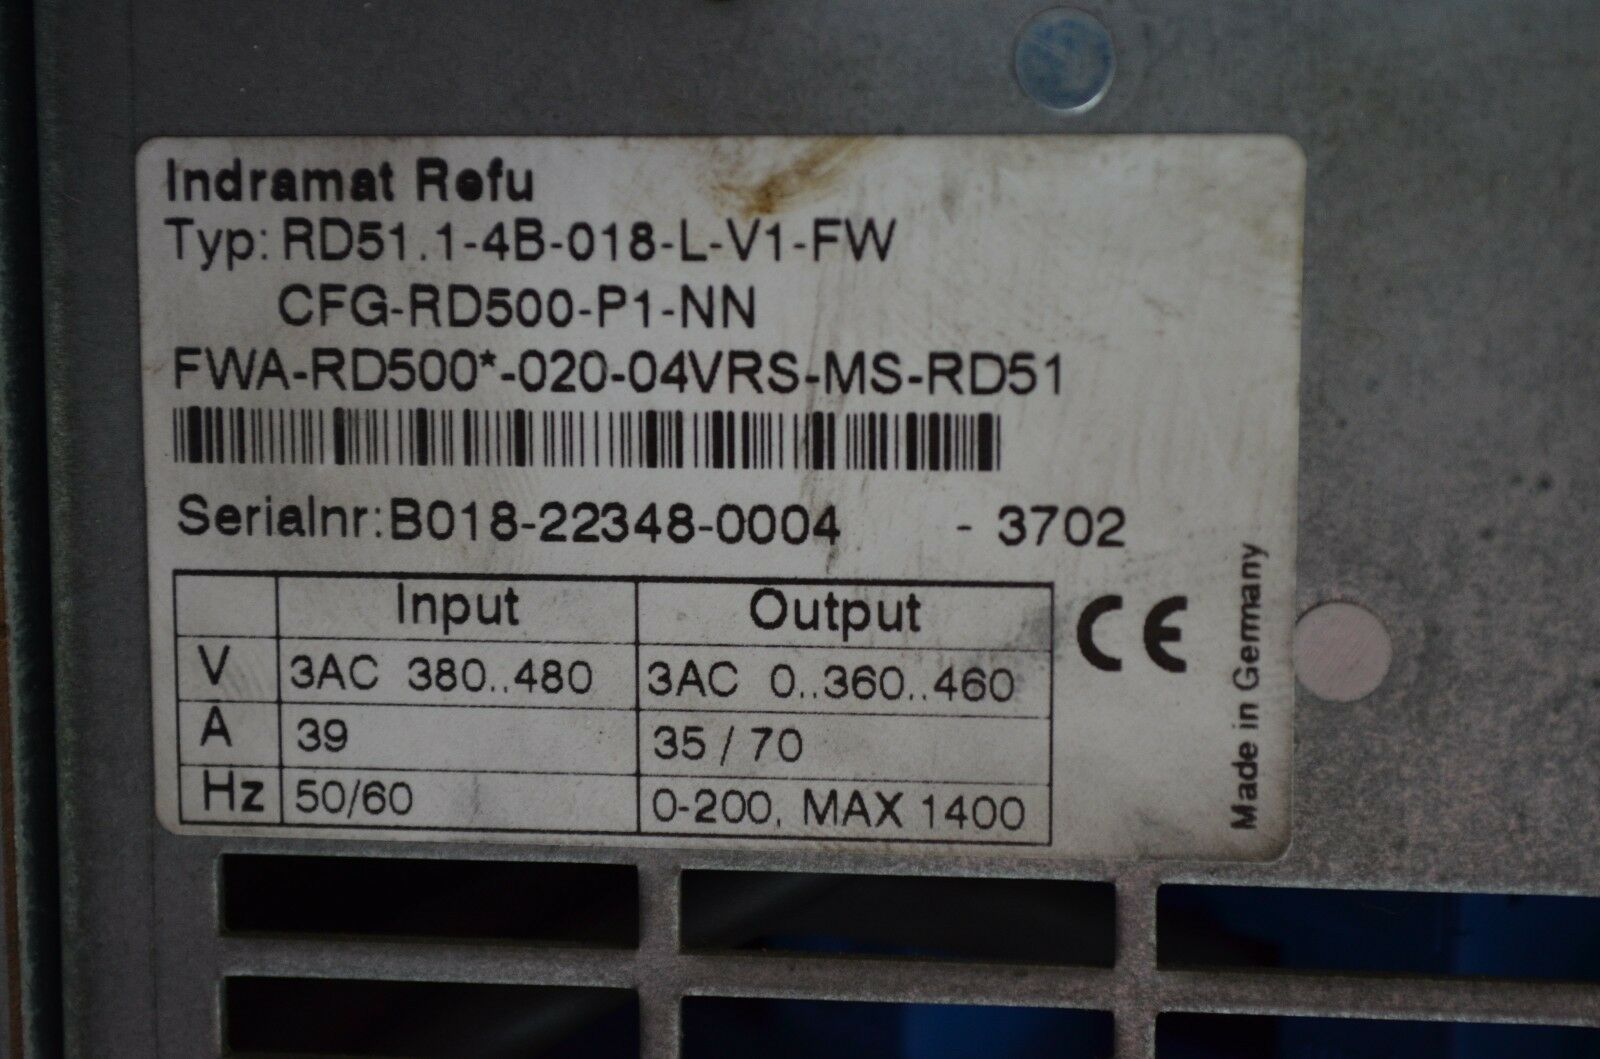 Indramat Refu RD51.1-4B-018-L-V1-FWCFG-RD500-P1-NN